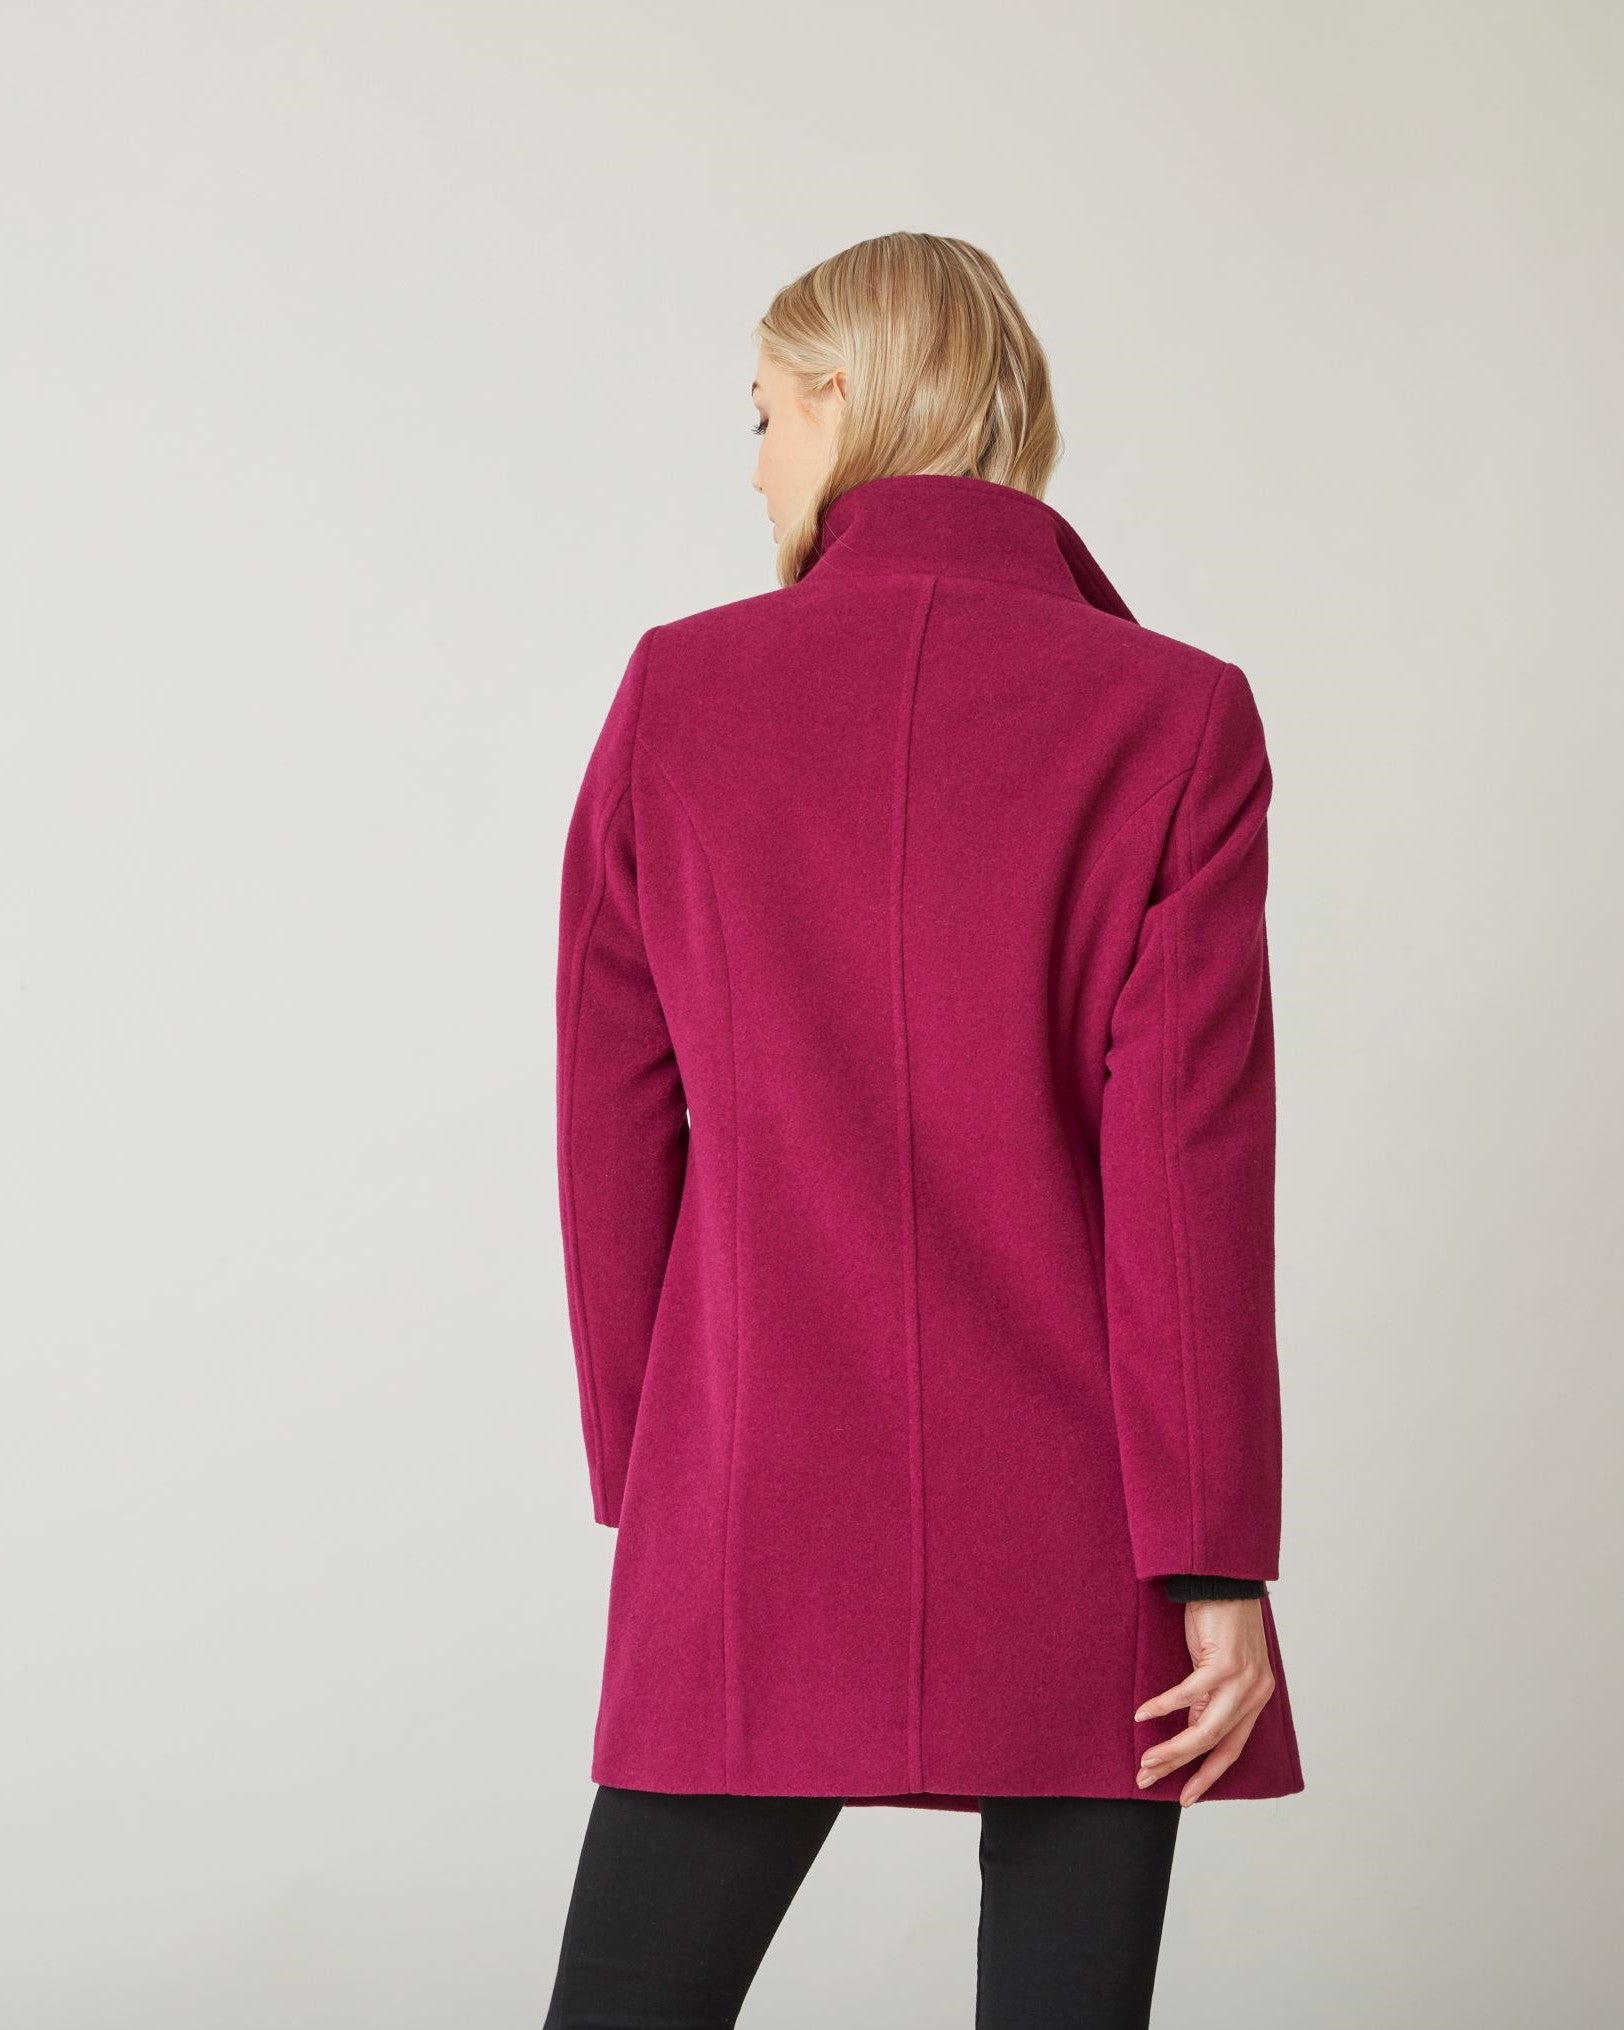 Sophisticate A-Line Wool Jacket